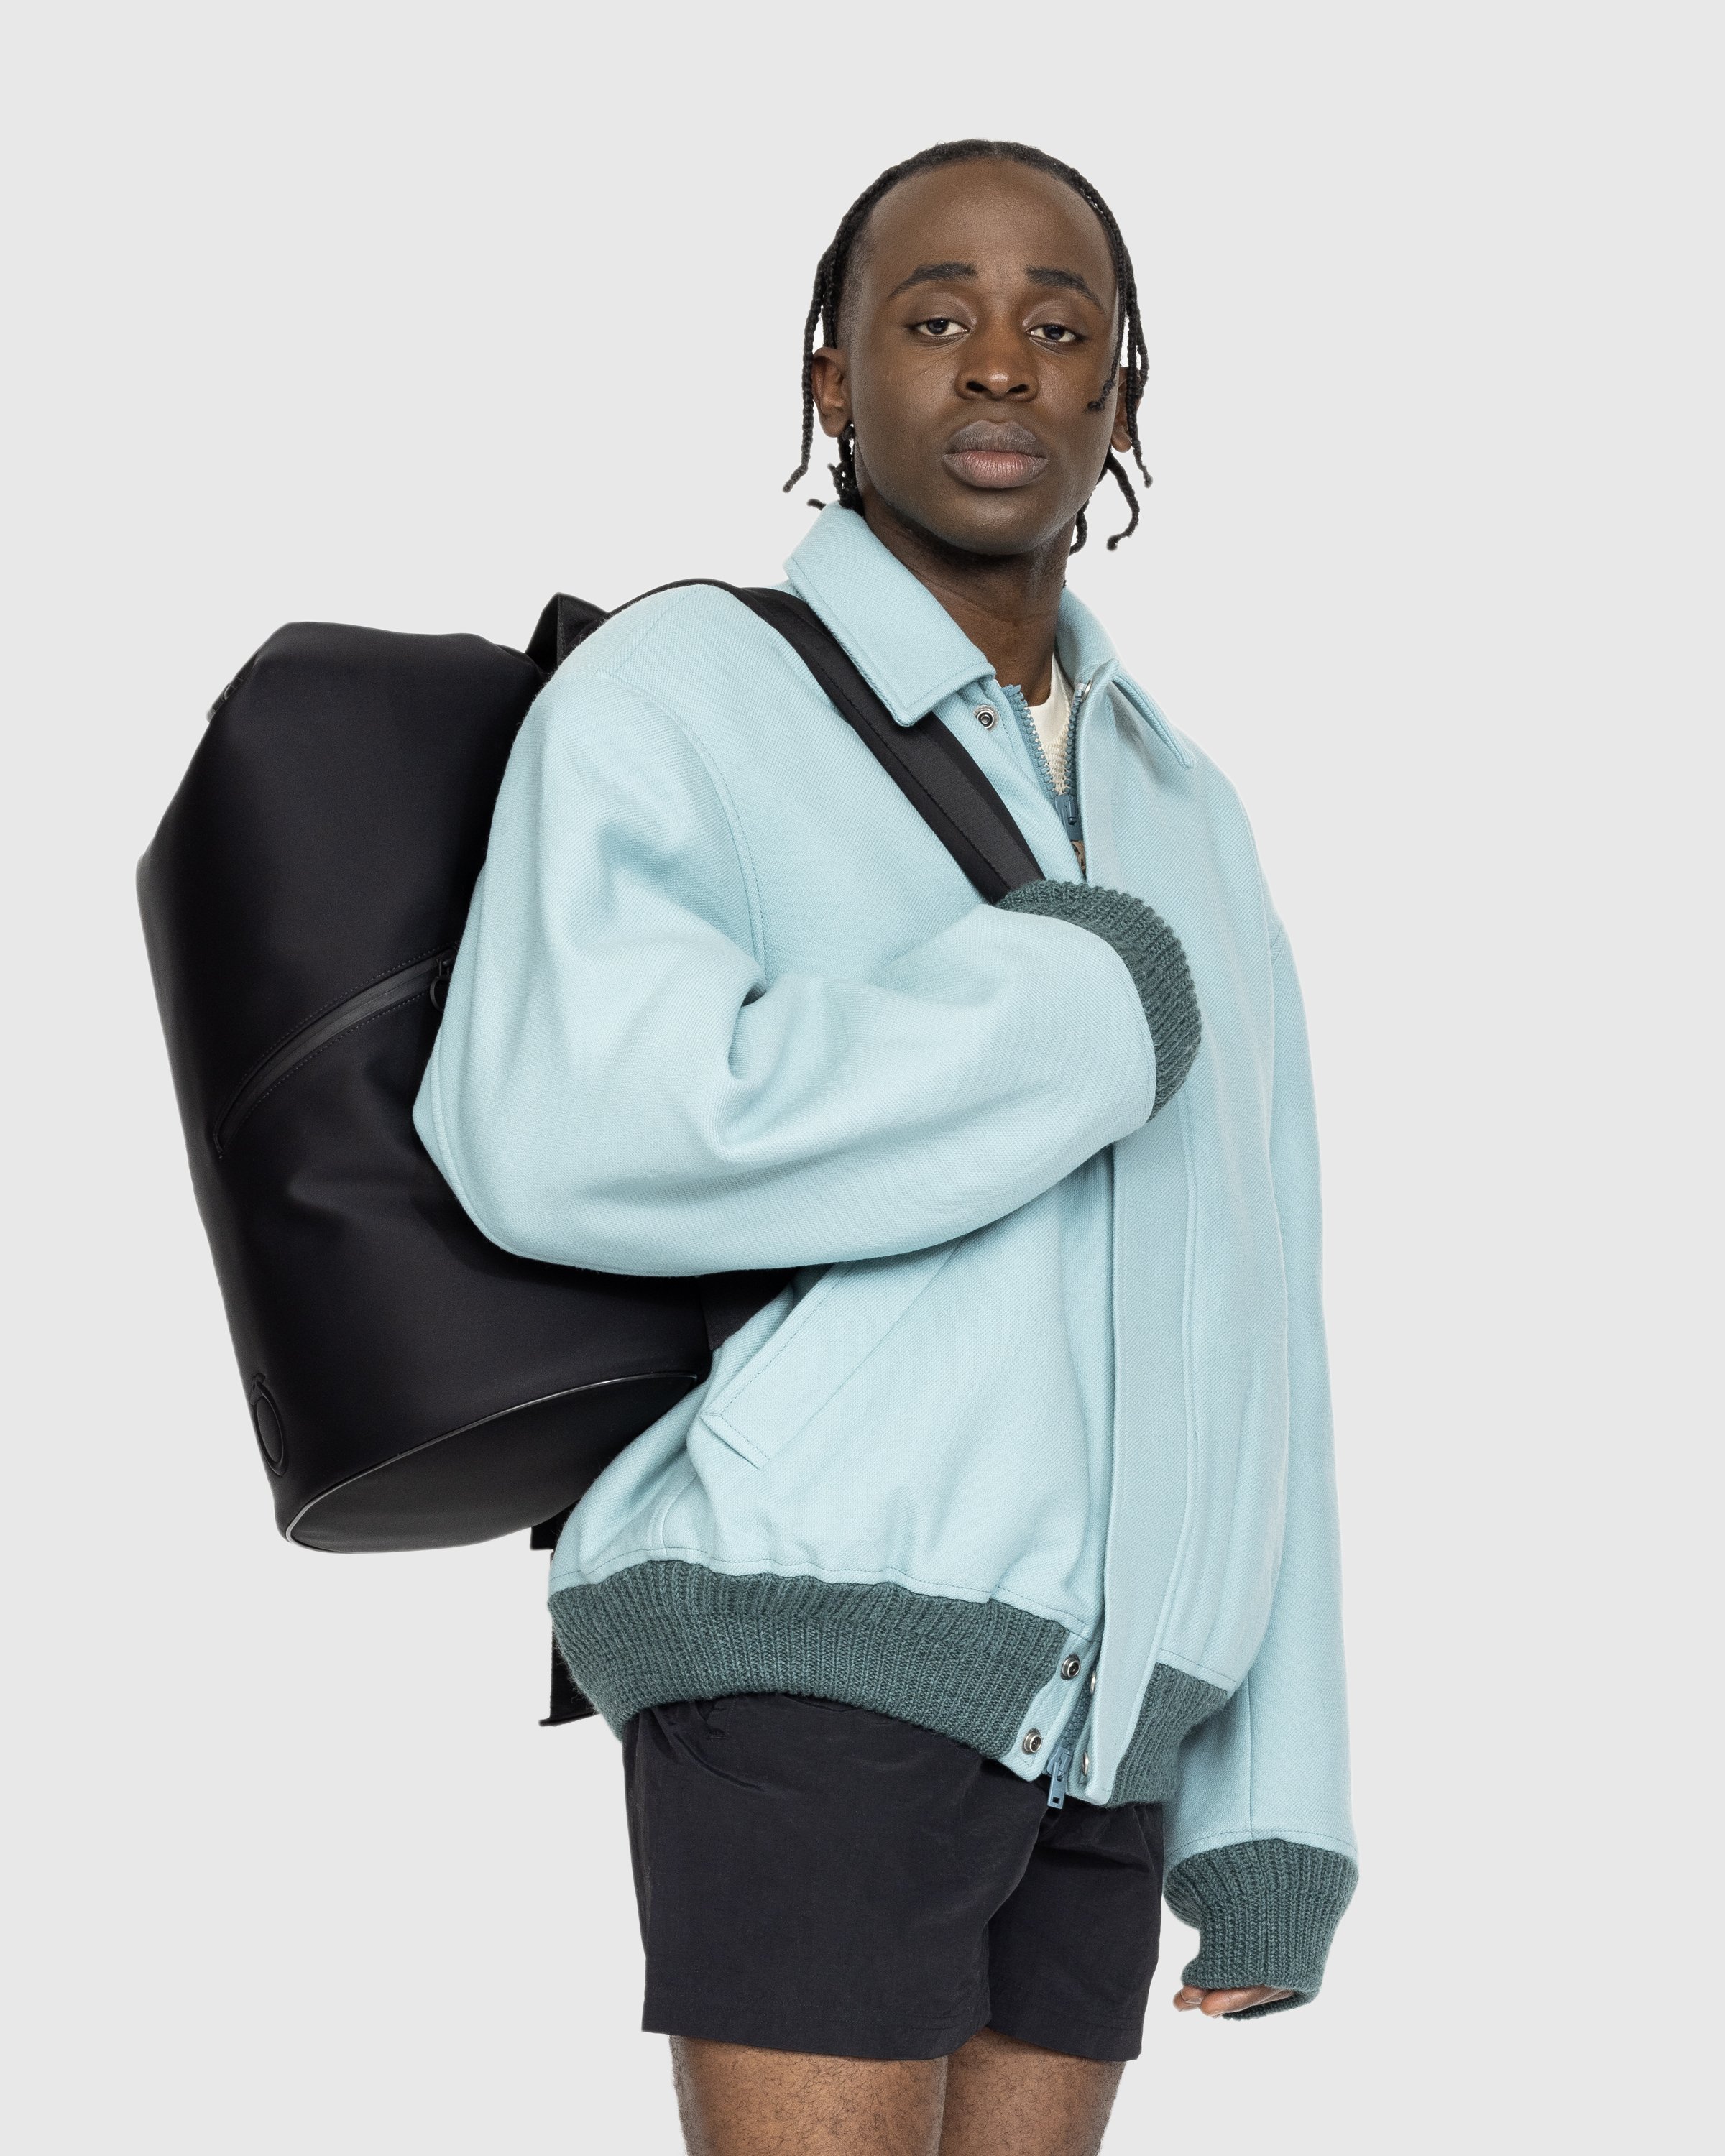 Trussardi - Syla Neoprene Backpack Black - Lifestyle - Black - Image 4